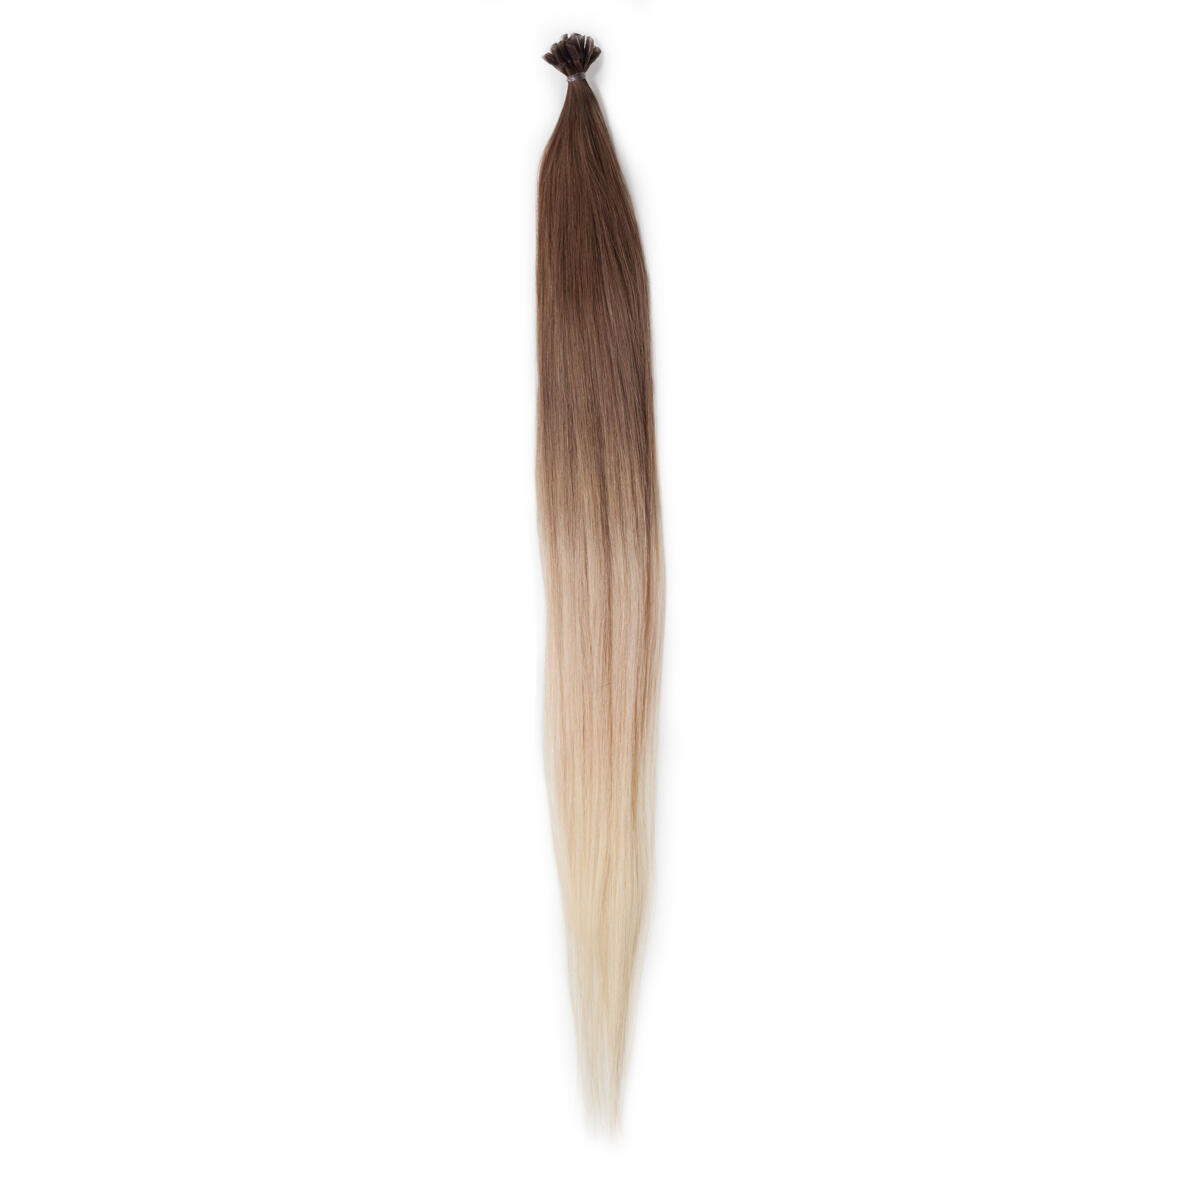 Nail Hair Original O5.1/10.8 Medium Ash Blond Ombre 60 cm